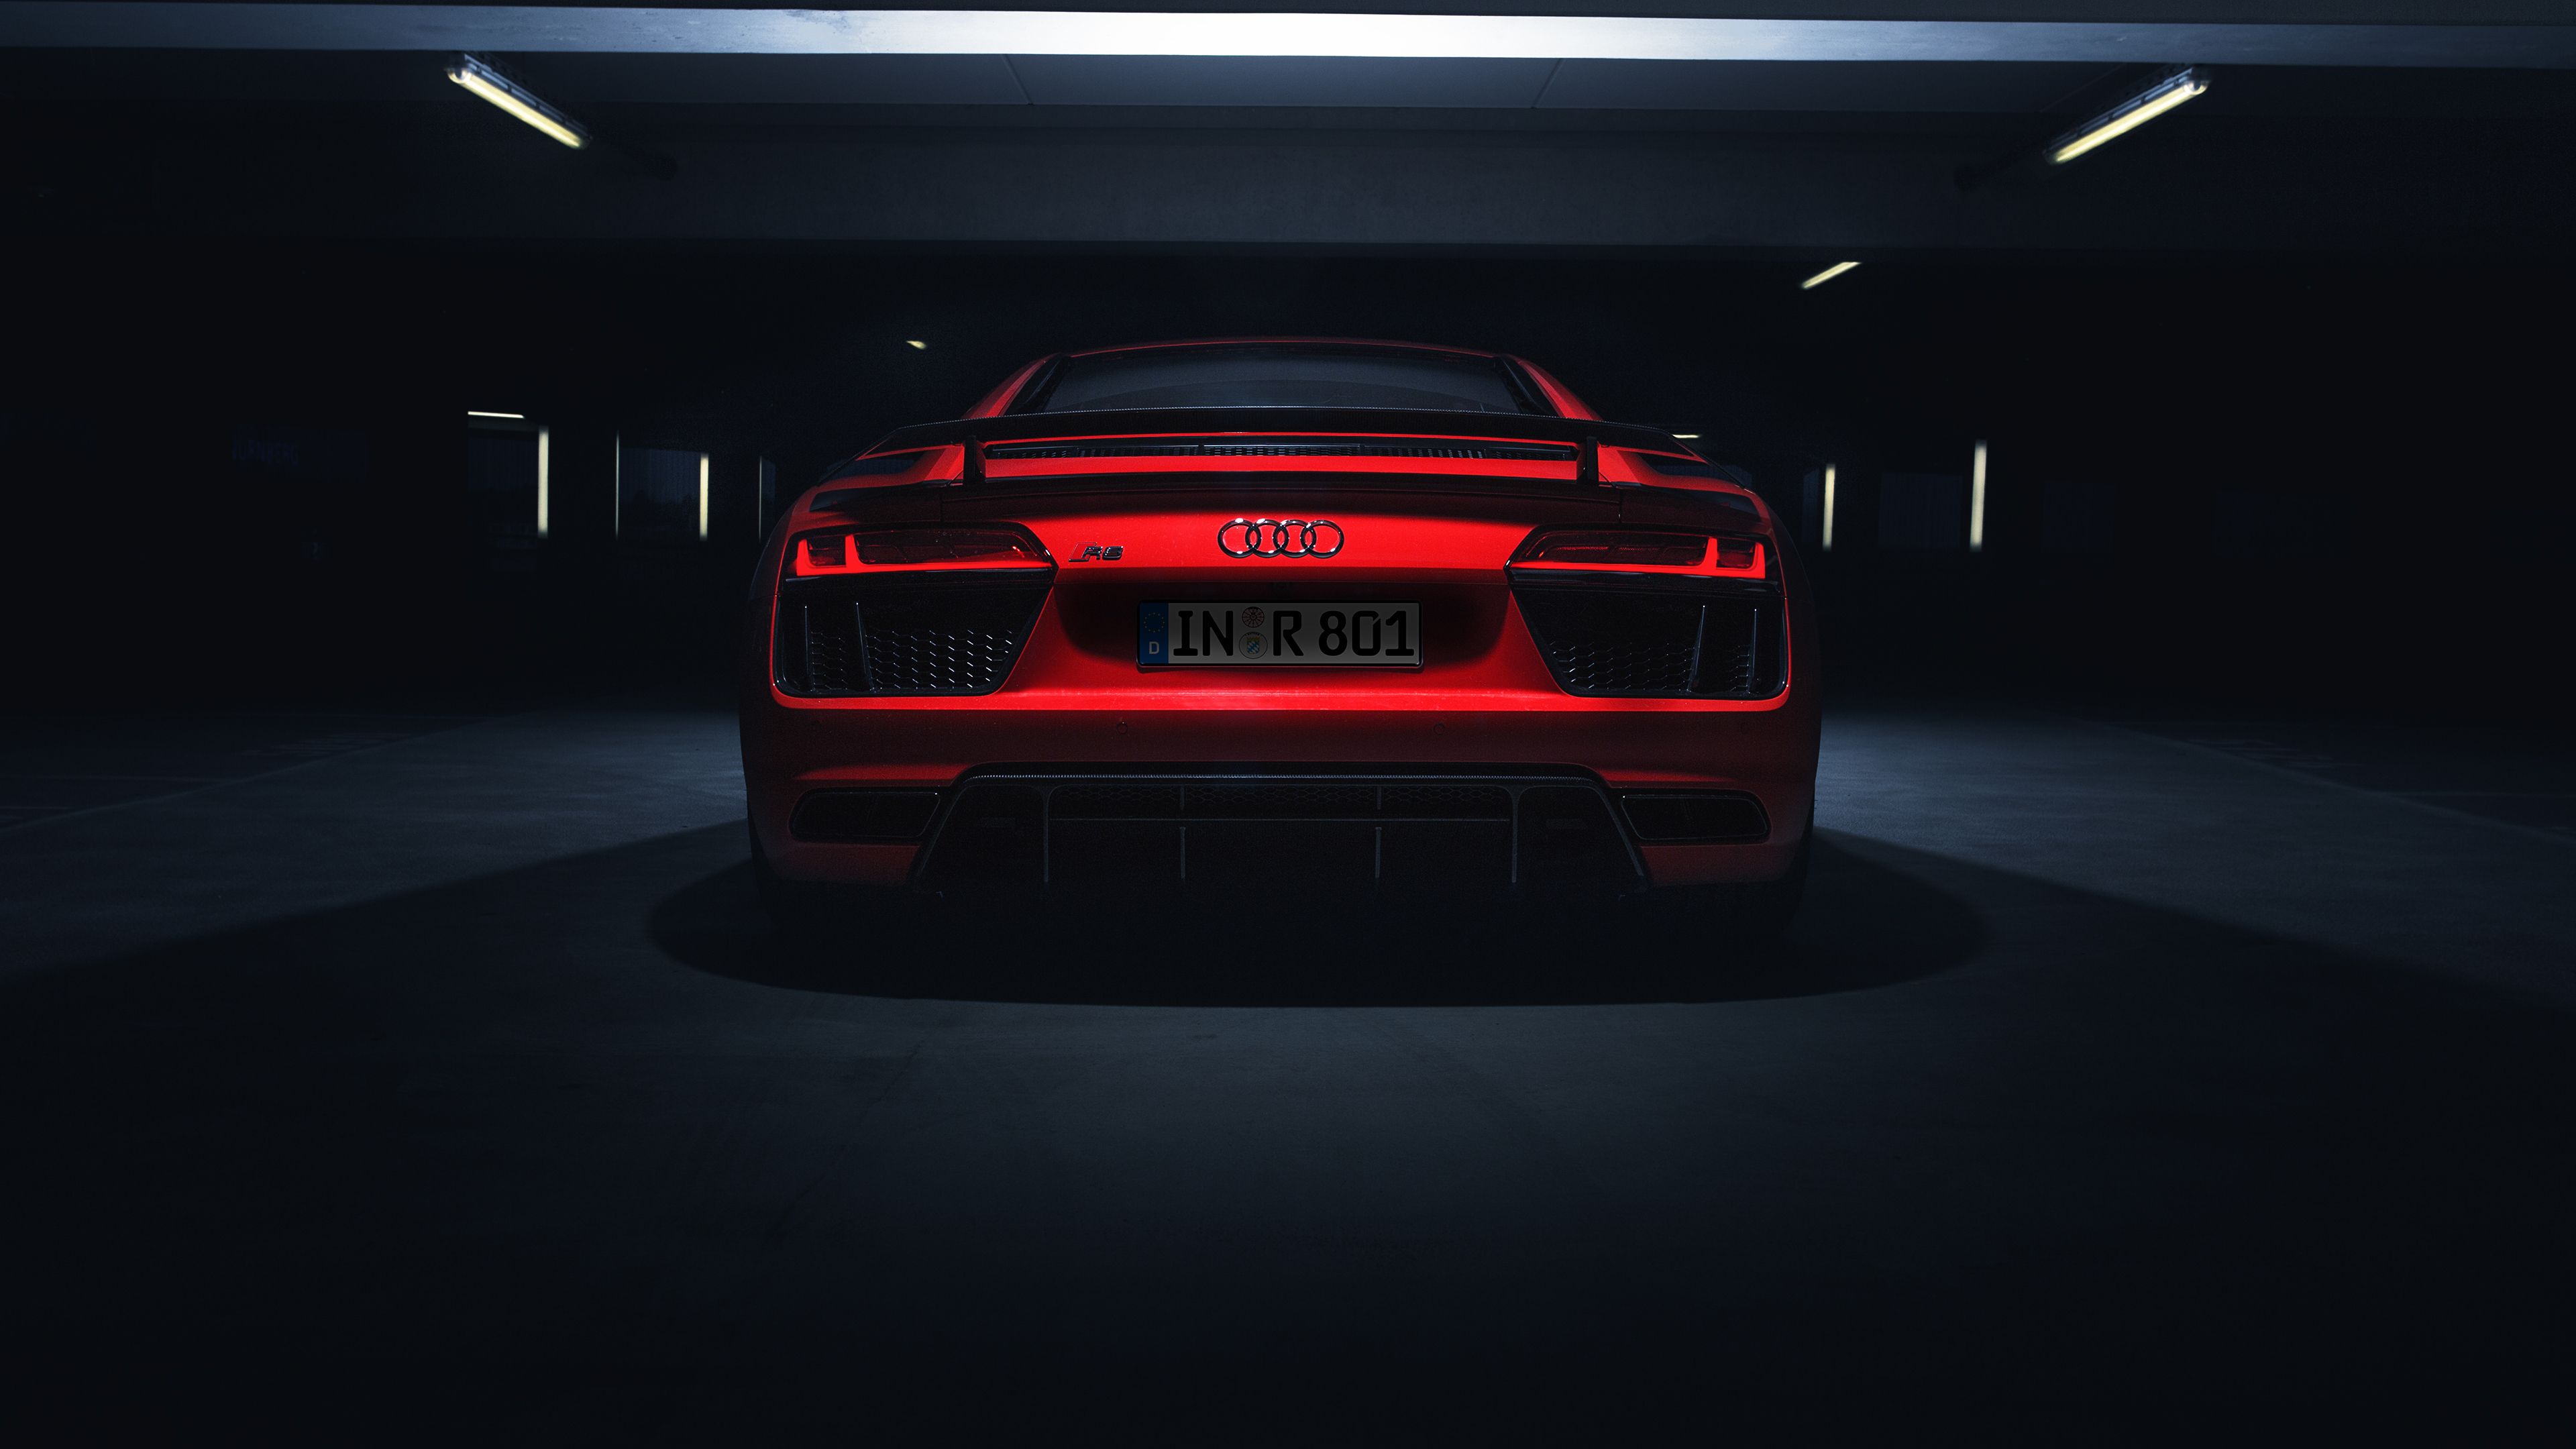 Audi Hd Wallpapers